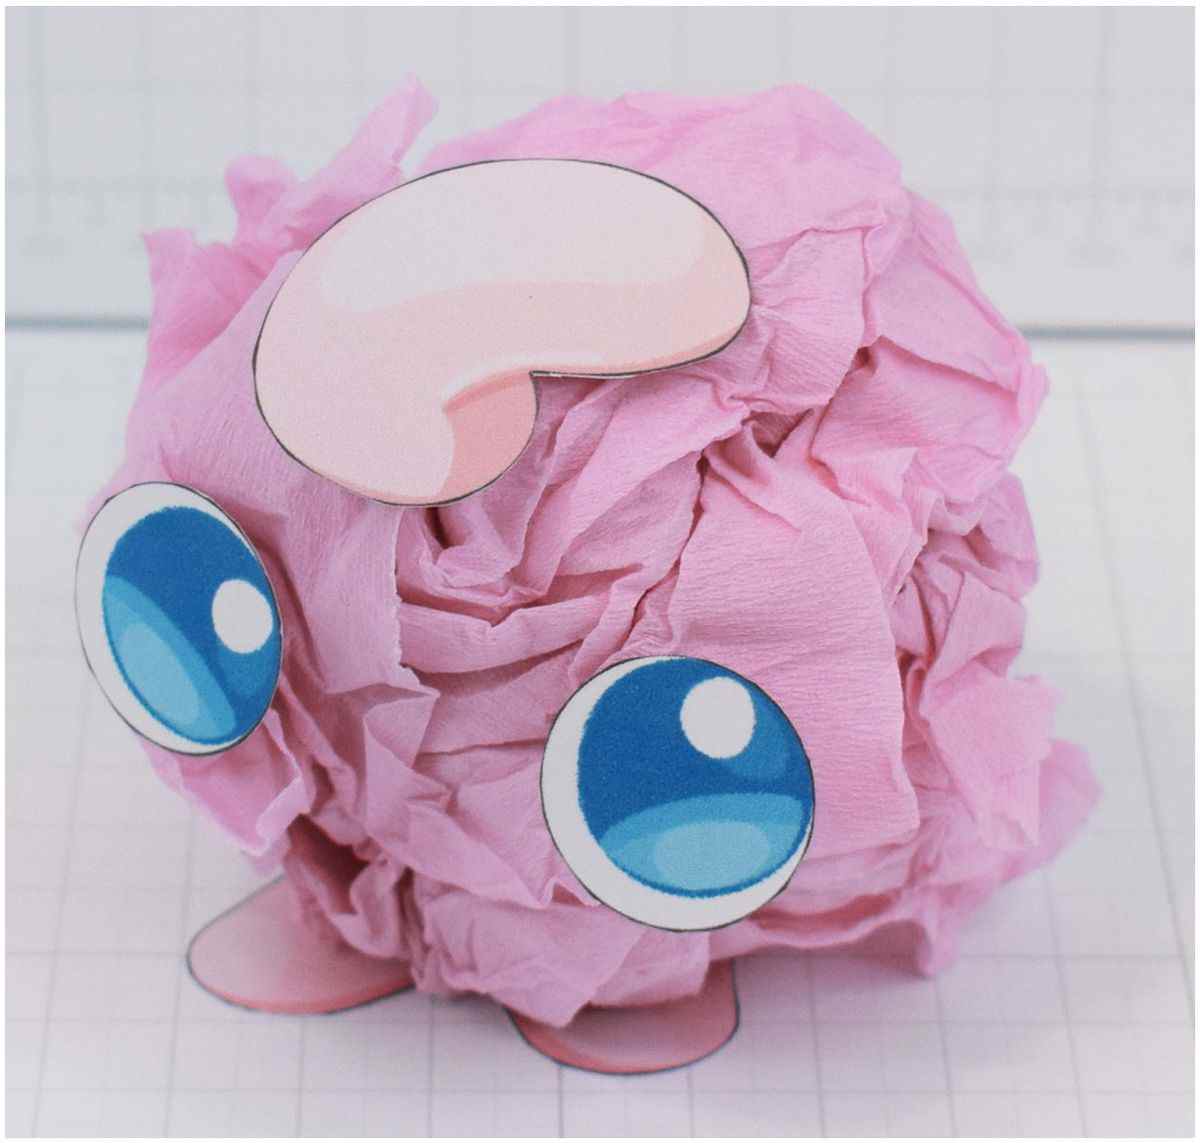 Paper Ball Jigglypuff processus 3/4